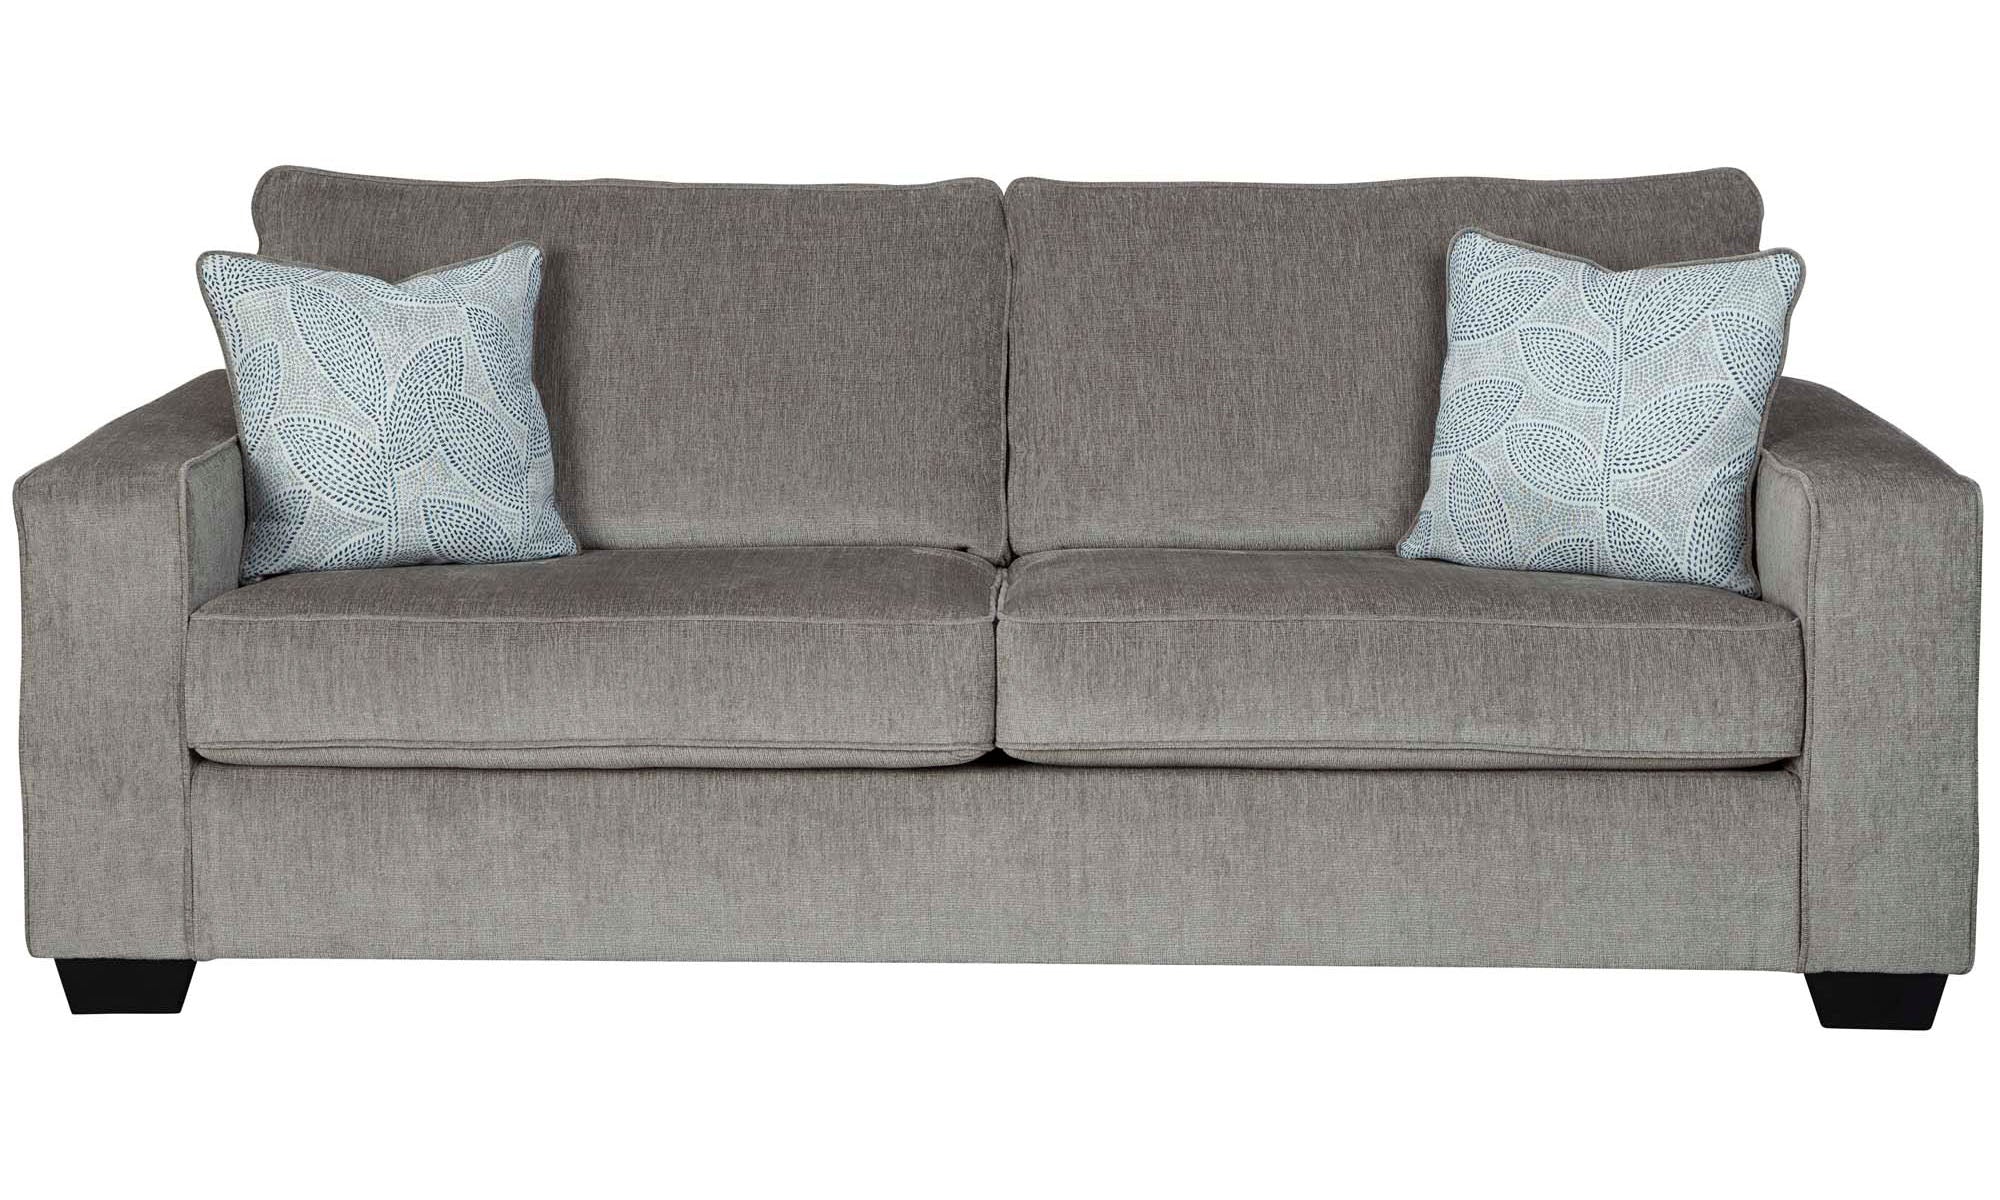 Altari Alloy Sofa - MJM Furniture